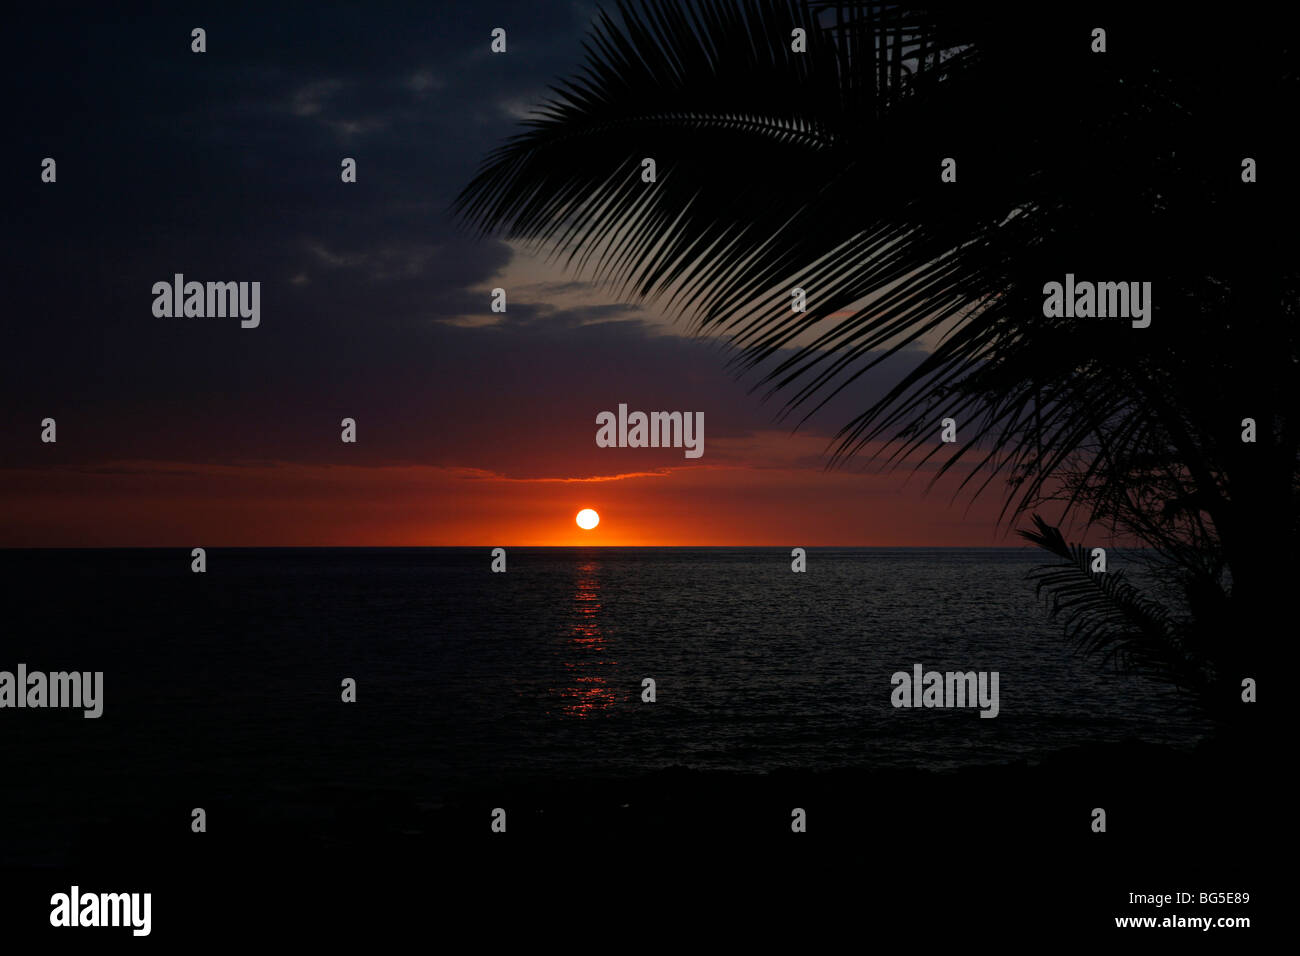 Tropical sunset Stock Photo